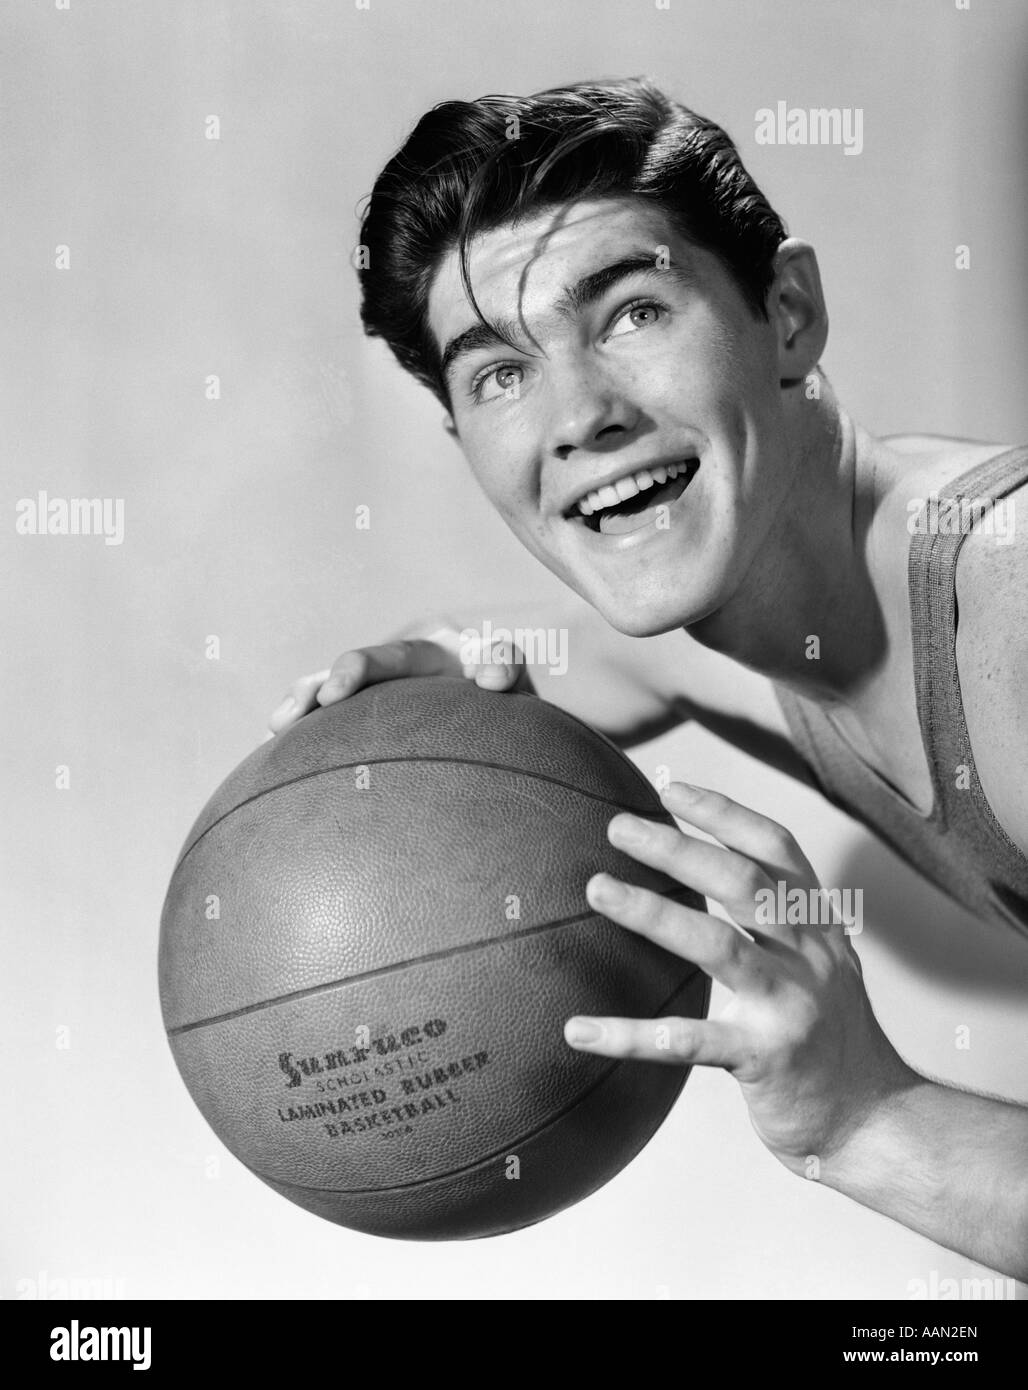 1950s BOY POSING HOLDING BASKETBALL SMILING Stock Photo